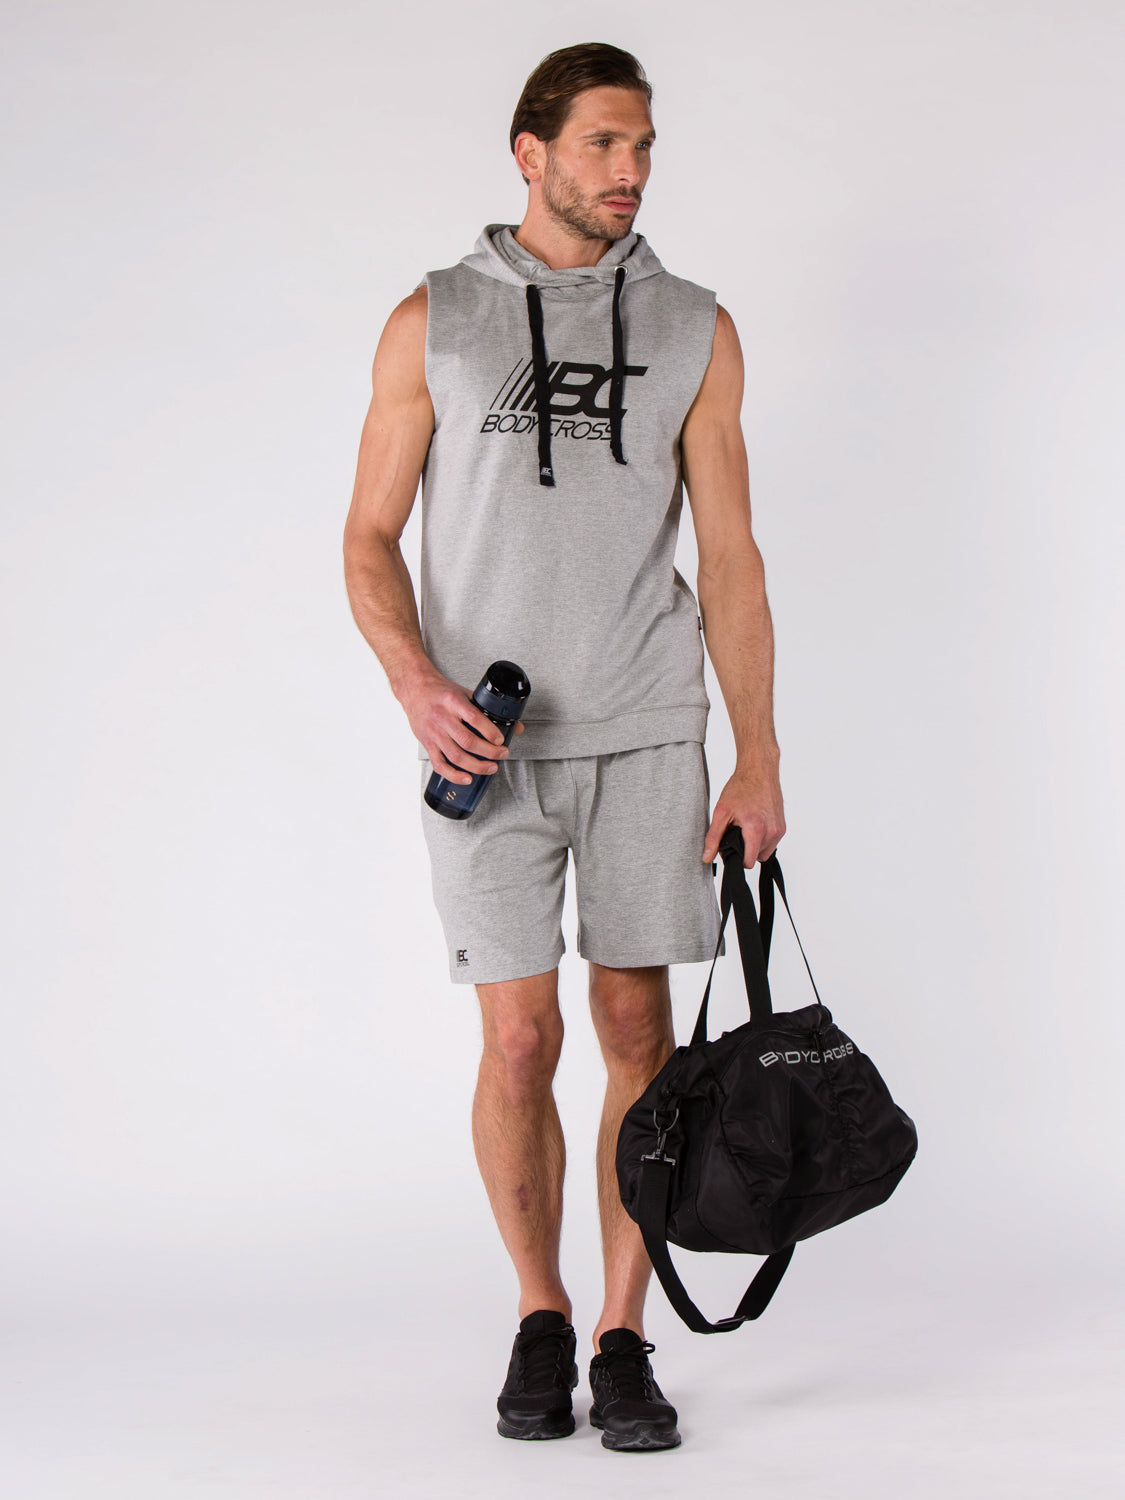 Men's Training Sleeveless hoody BodyCross - Benjy Grey